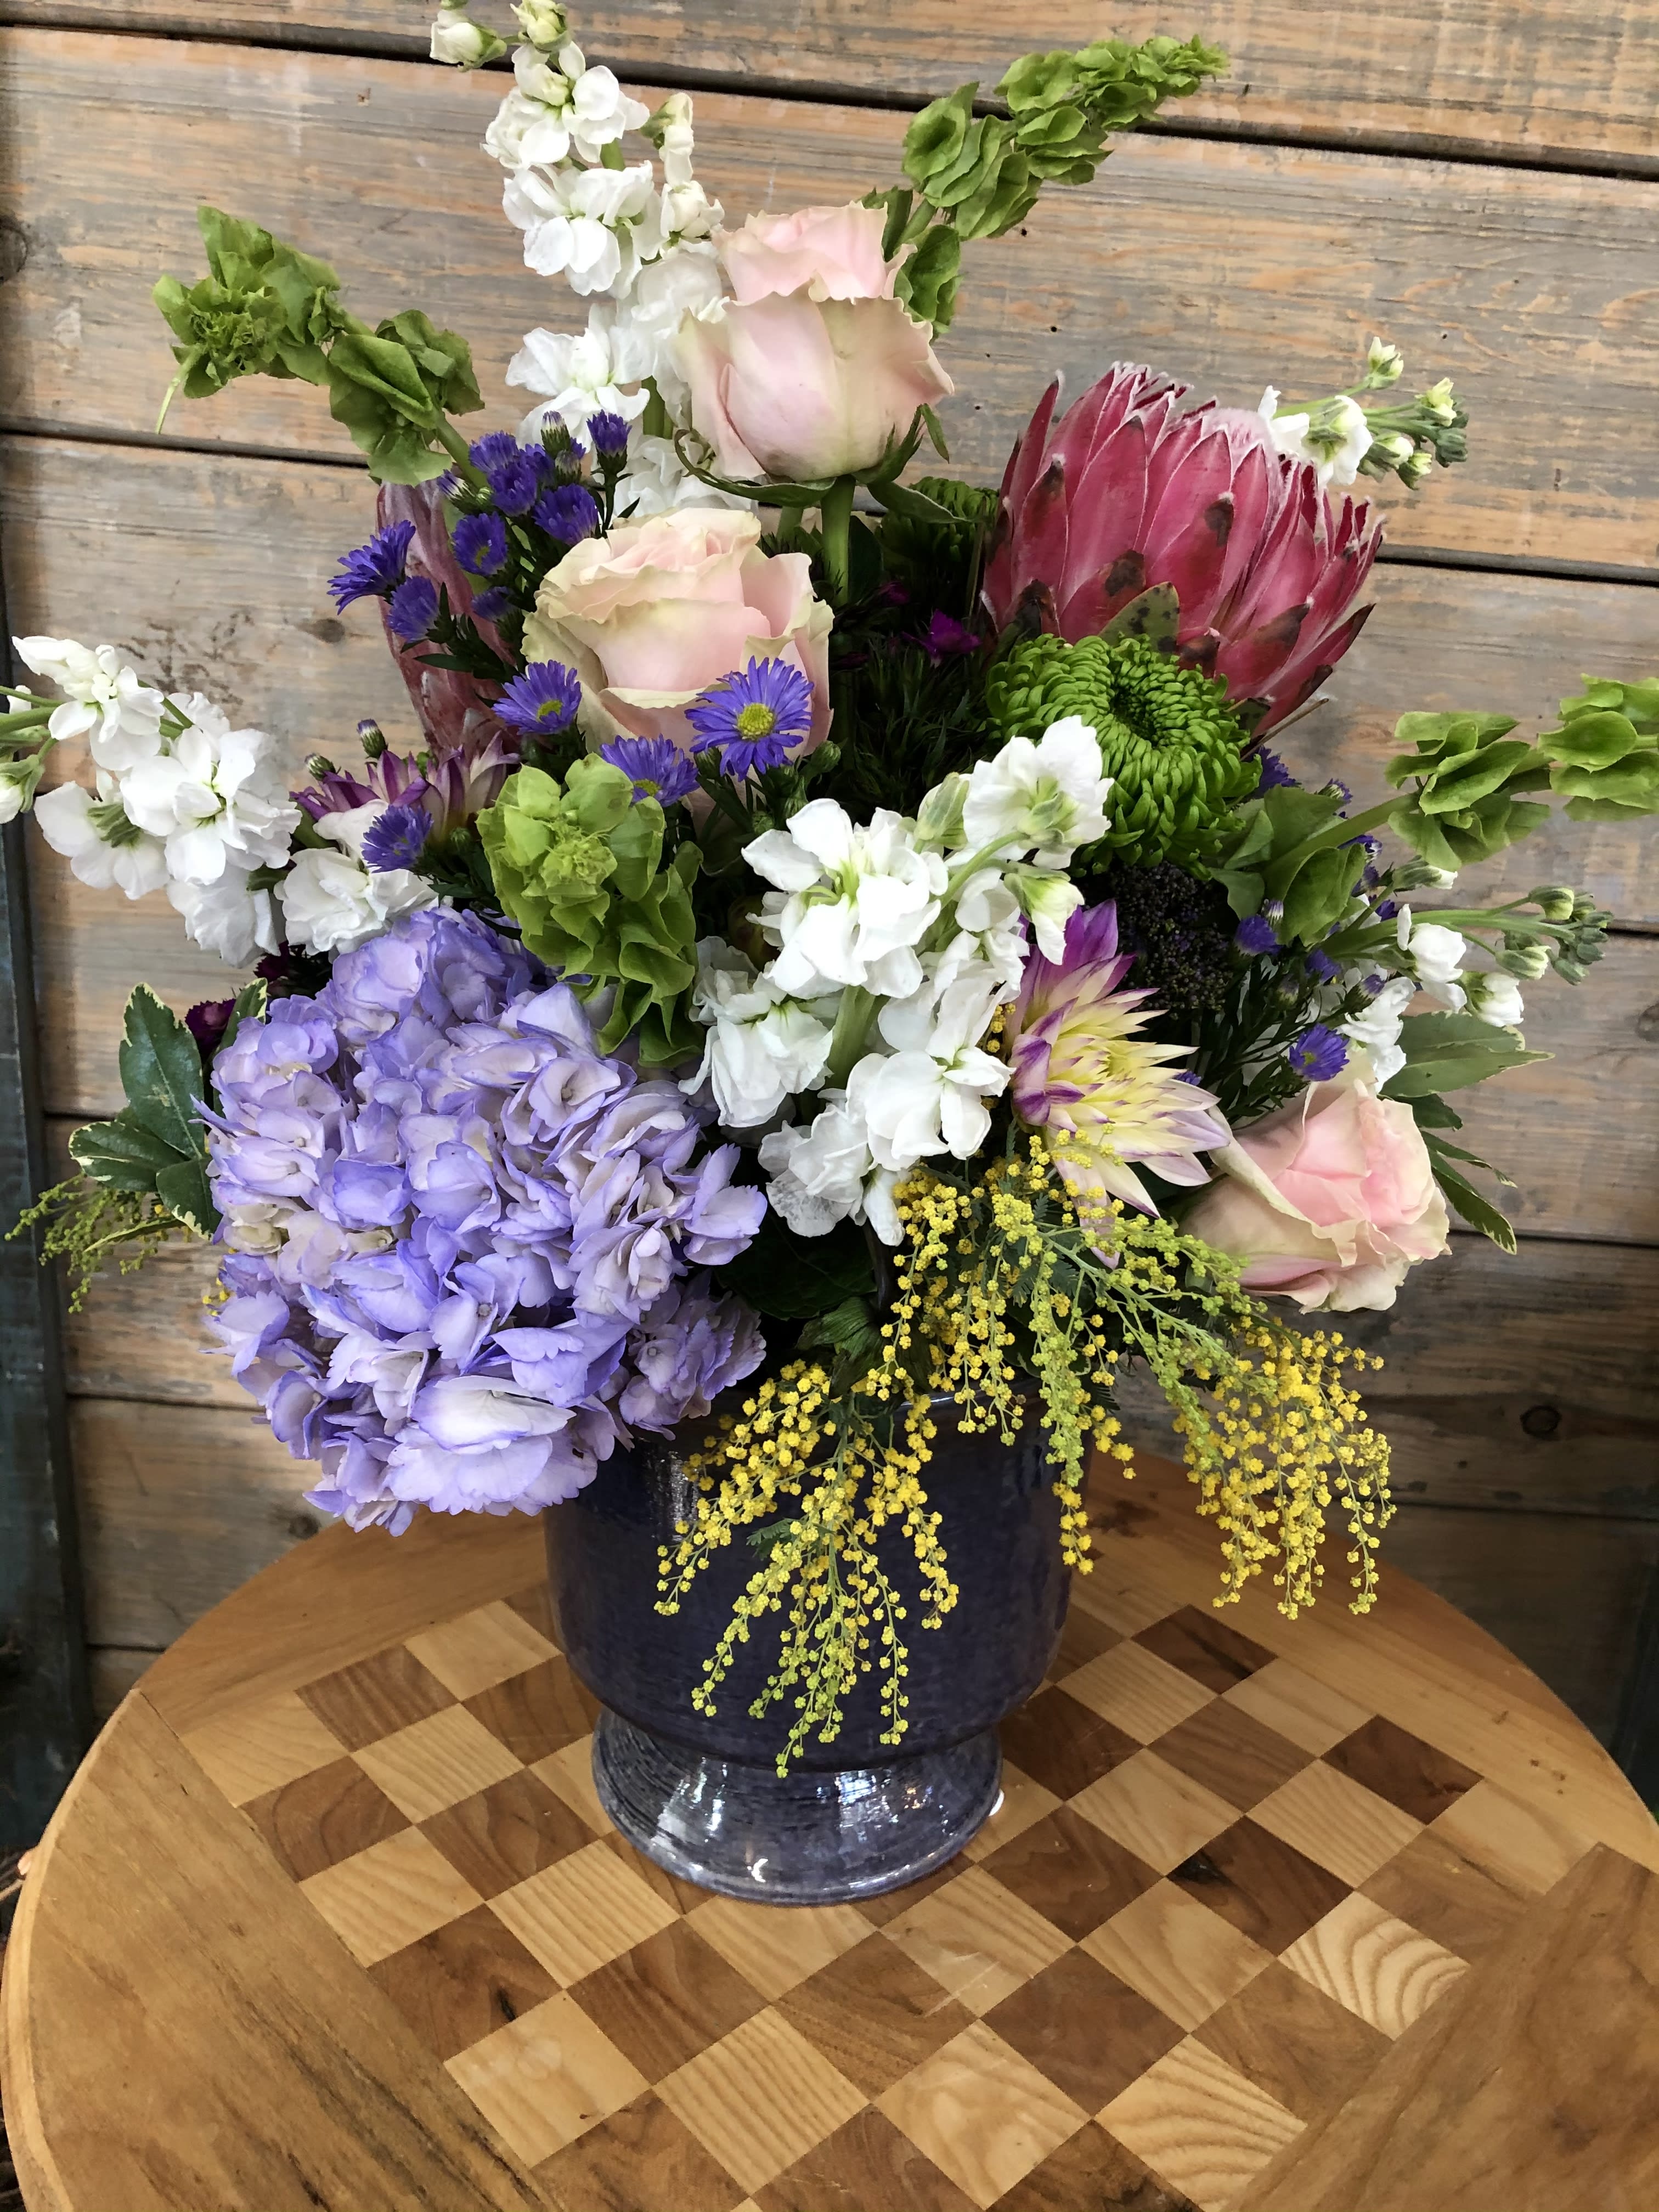 Pastel Design - A beautiful eye catching design. A vase full of seasonal fresh blooms and interesting greens.